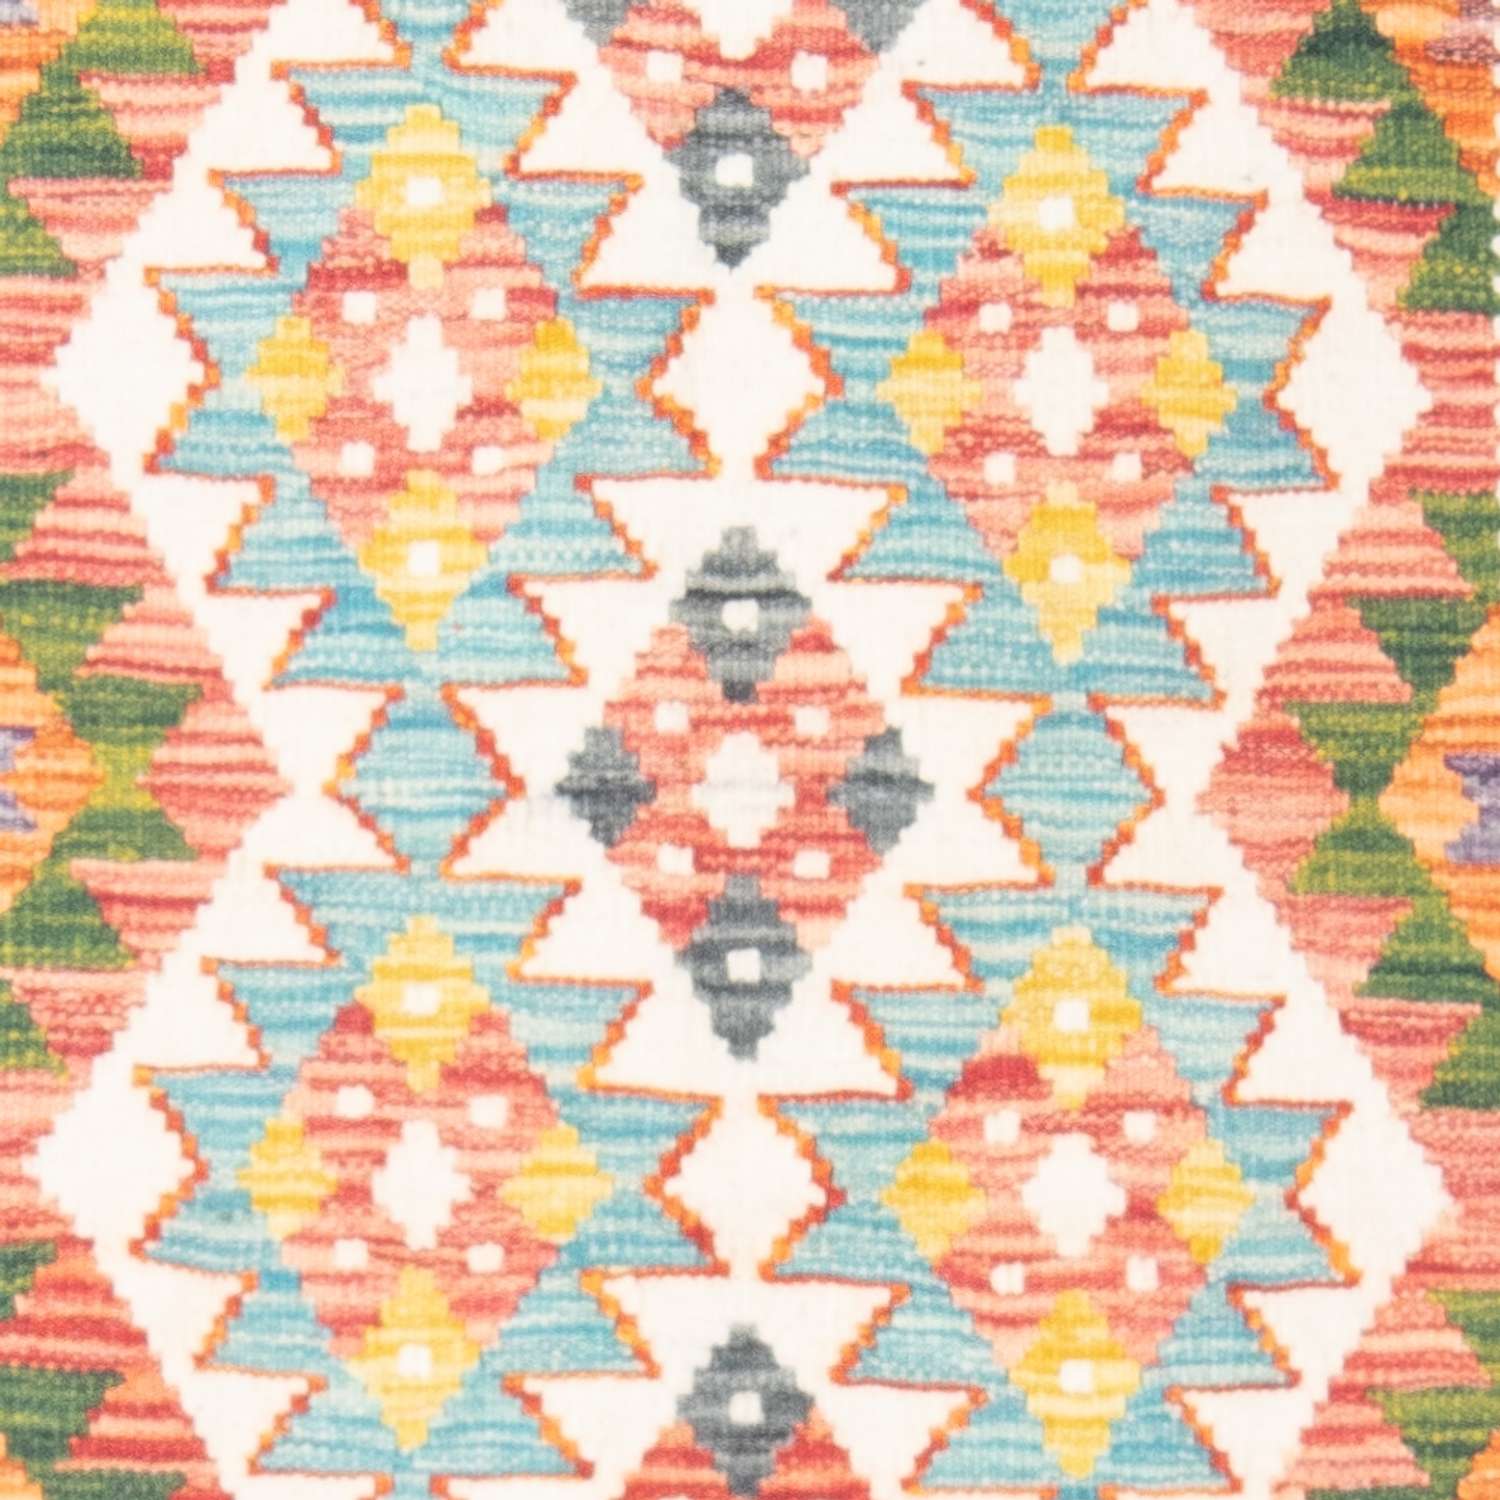 Kelim tapijt - Splash - 143 x 98 cm - veelkleurig